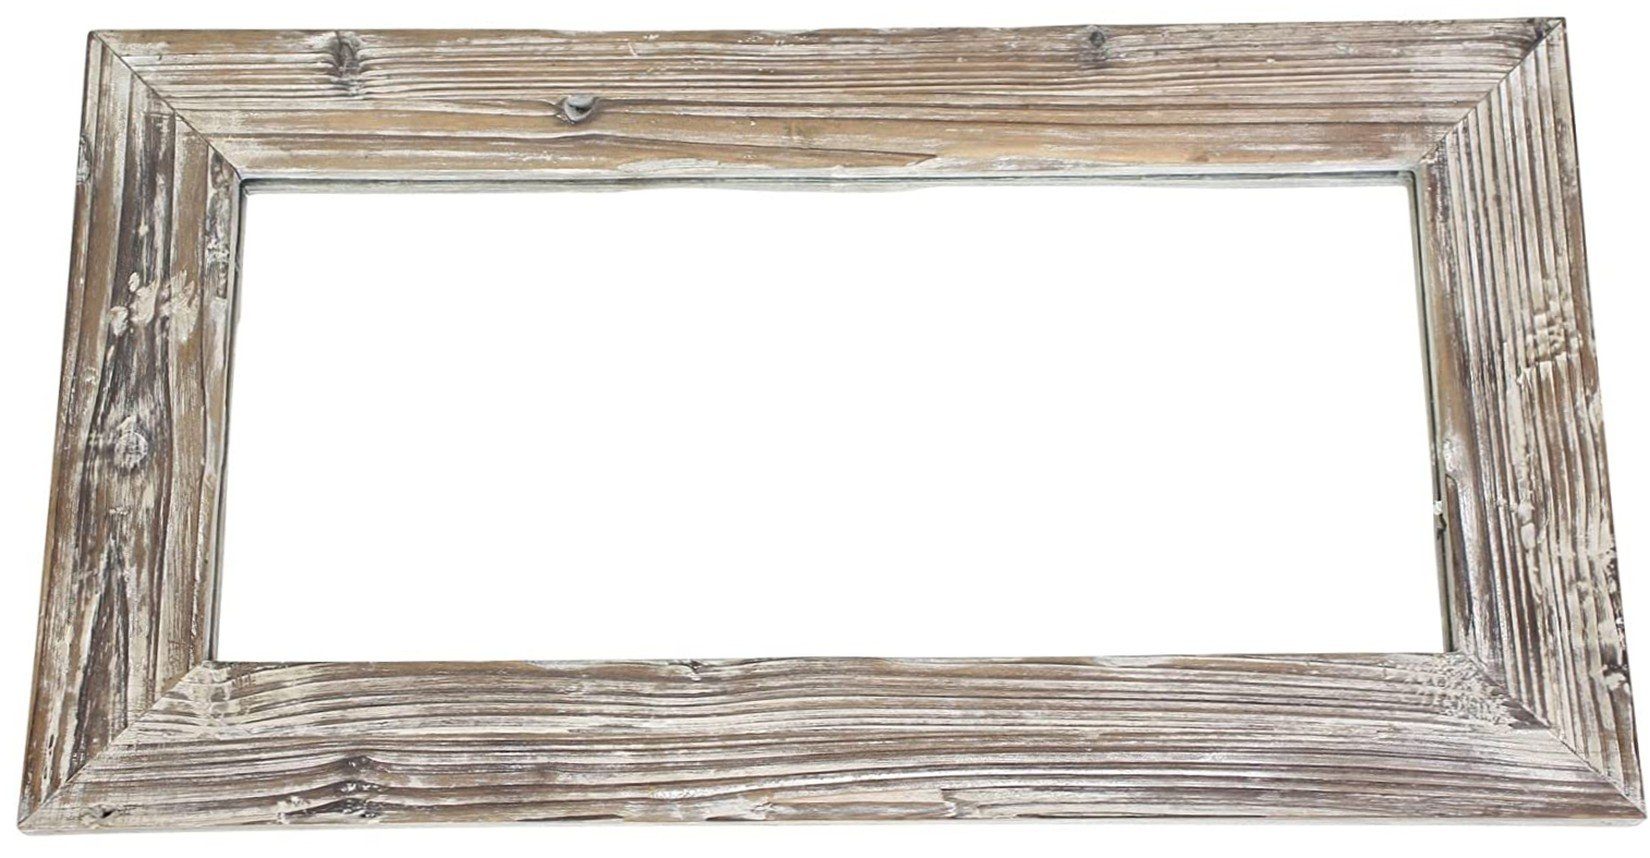 Dekoleidenschaft Wandspiegel "Rustikal" natur, Holzrahmen Flurspiegel Dekospiegel, Barspiegel, quer, cm 66x36 hängend, zum Aufhängen mit Garderobenspiegel